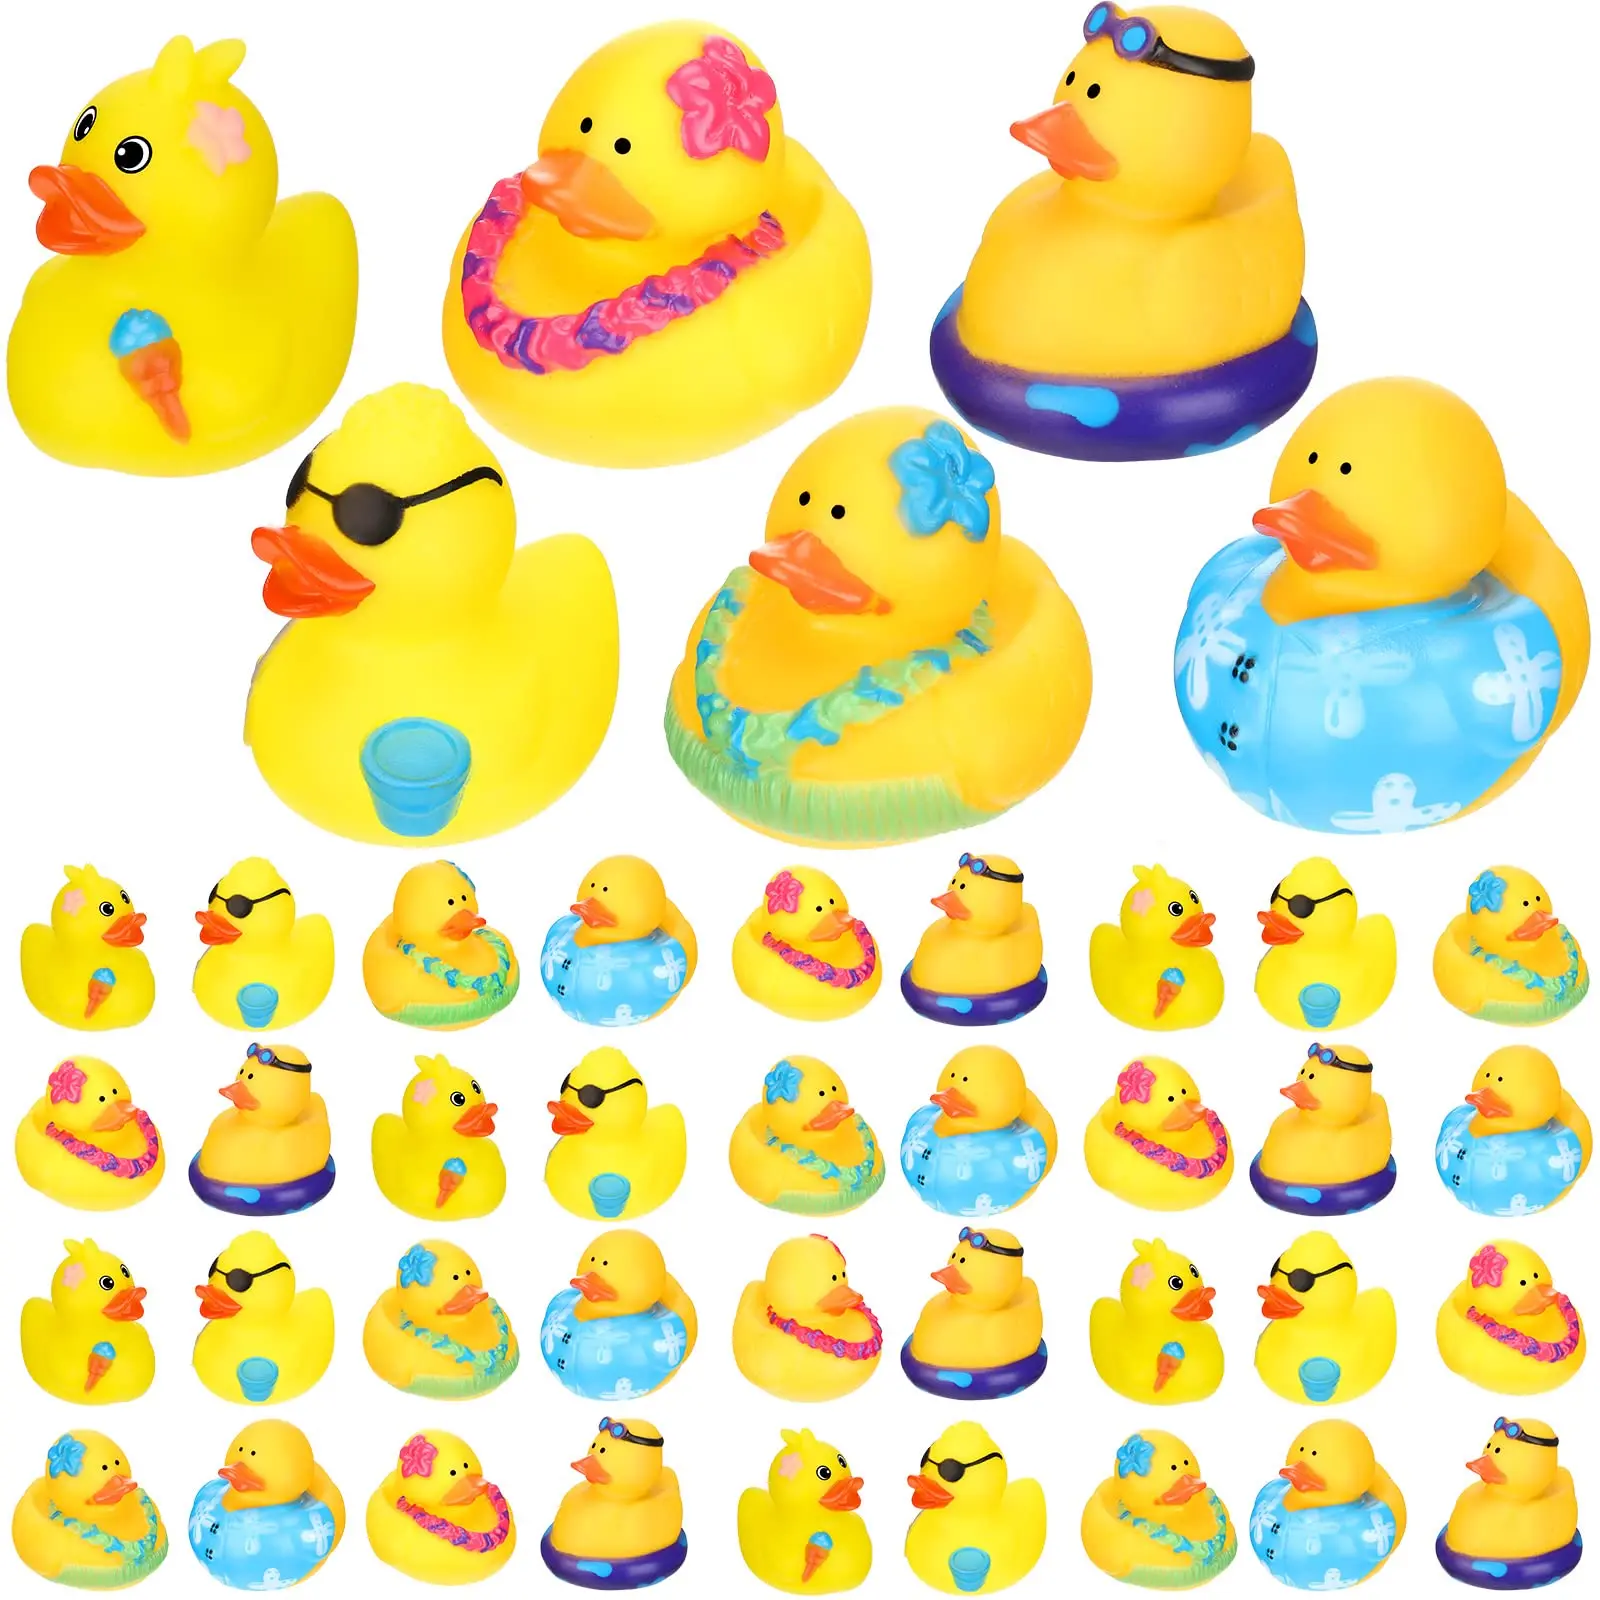 

12/24/36 Pcs Rubber Ducks Summer Beach Bath Toy Rubber Duck Bulk Yellow Ducks for Birthday Gifts Shower Party Favors Activity